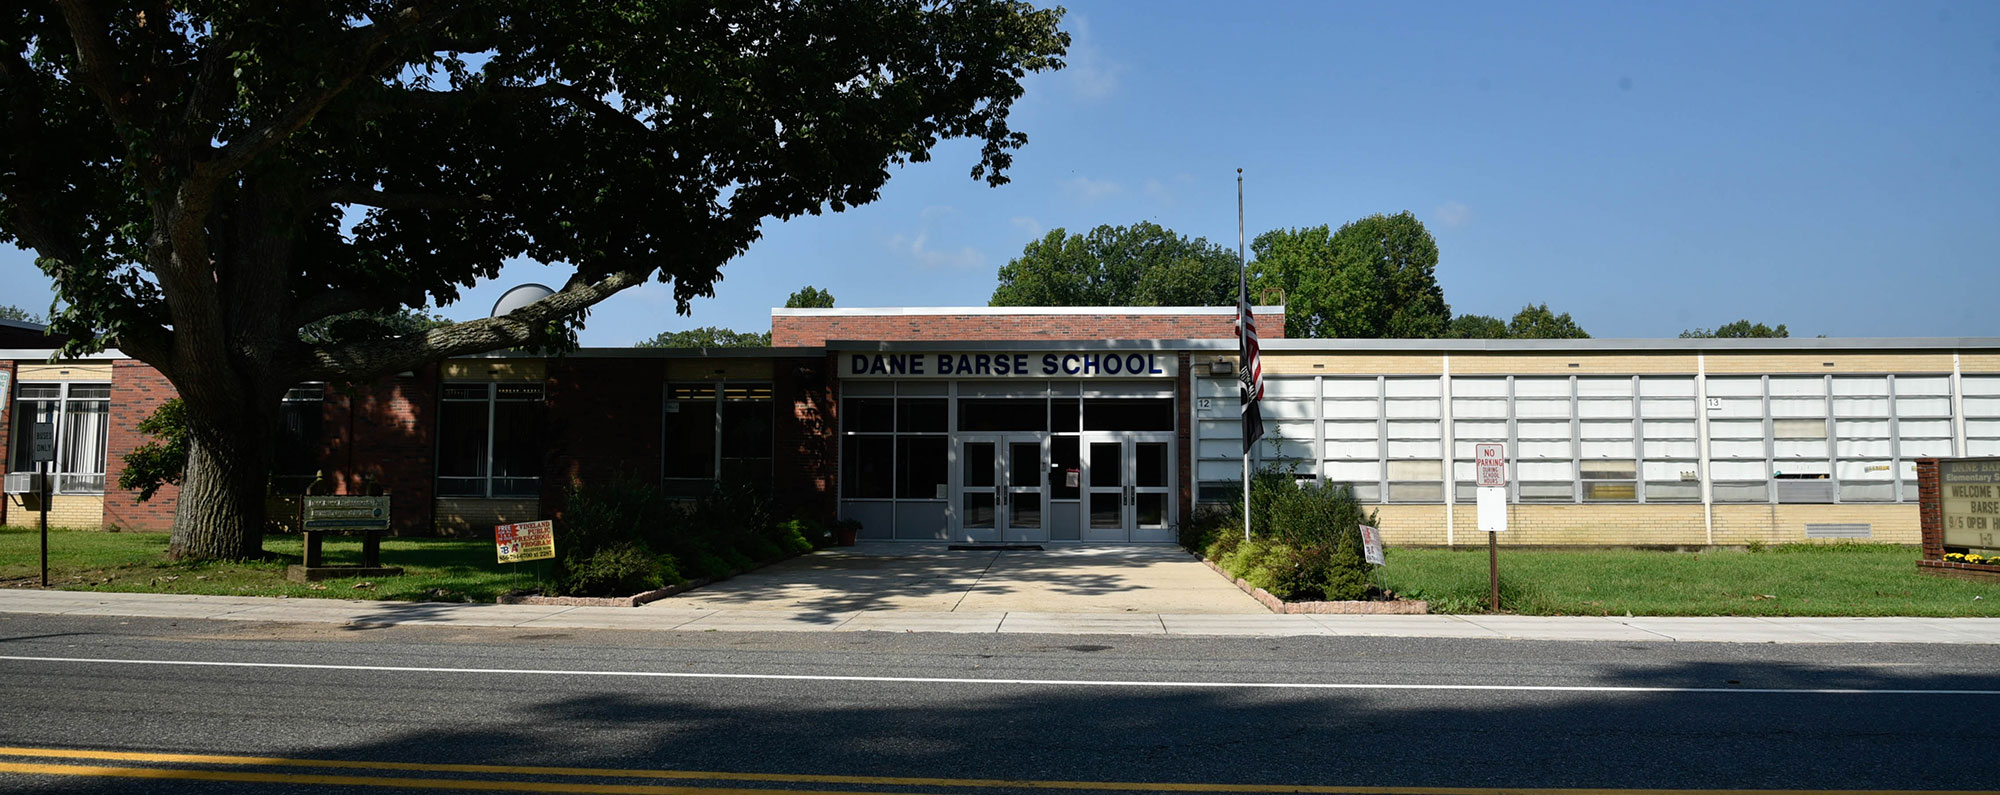 barse school front